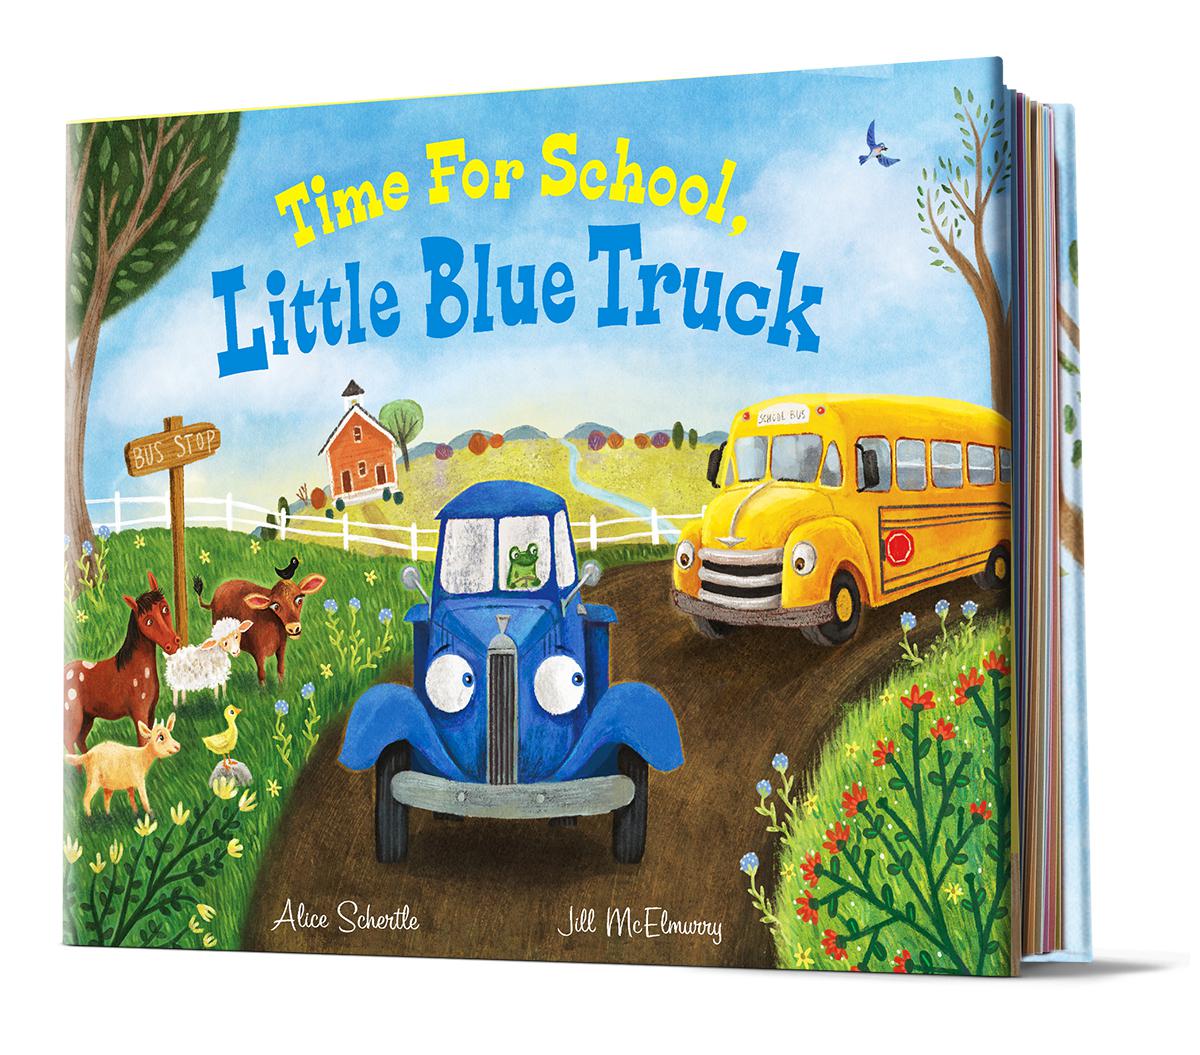  Time for School, Little Blue Truck 